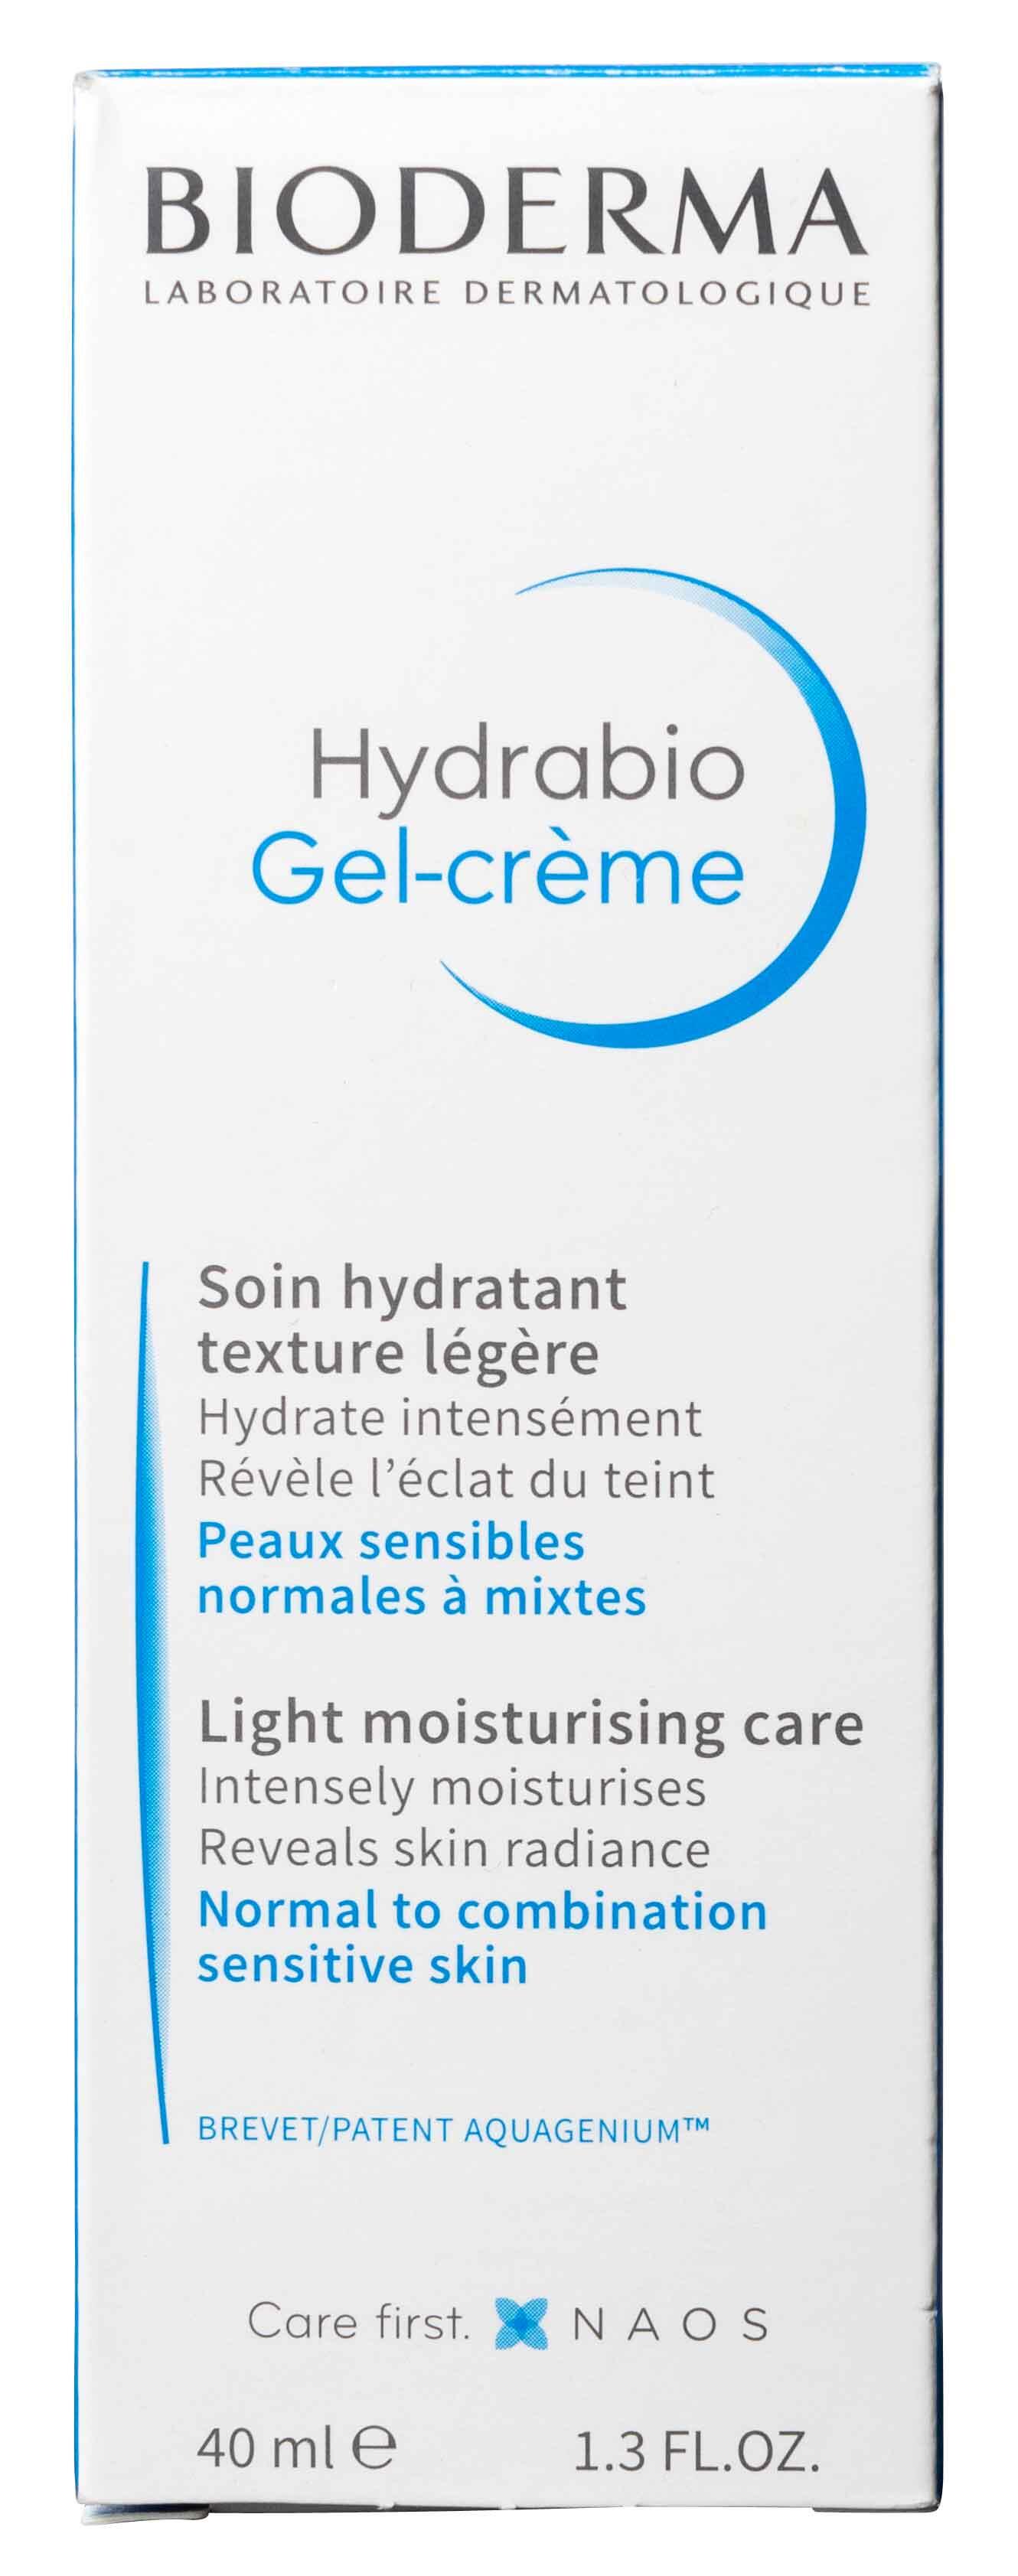 Hydrabio gel-creme Bioderma